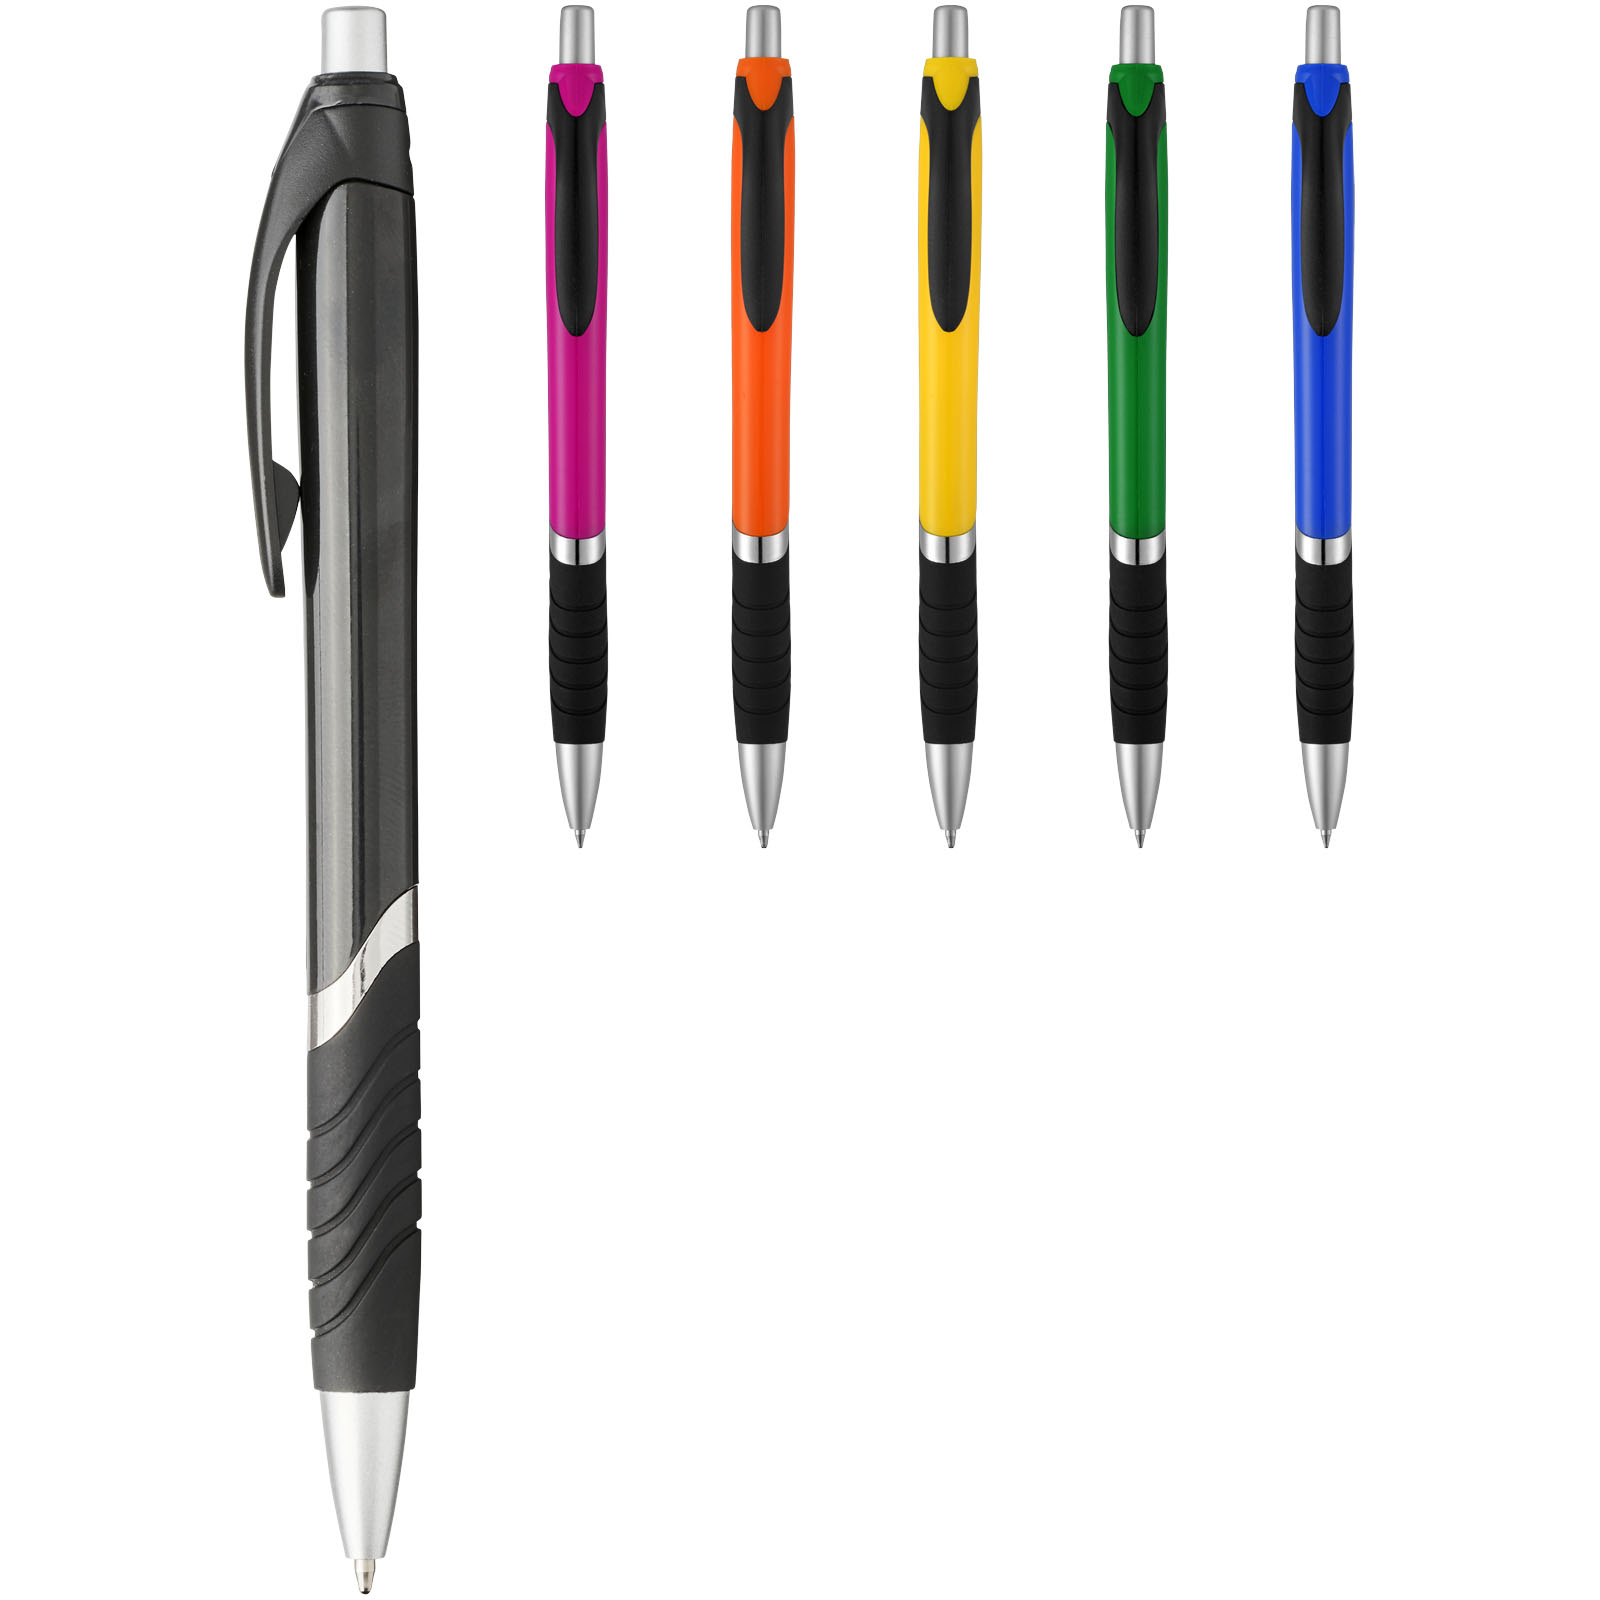 Advertising Ballpoint Pens - Turbo ballpoint pen with rubber grip - 0